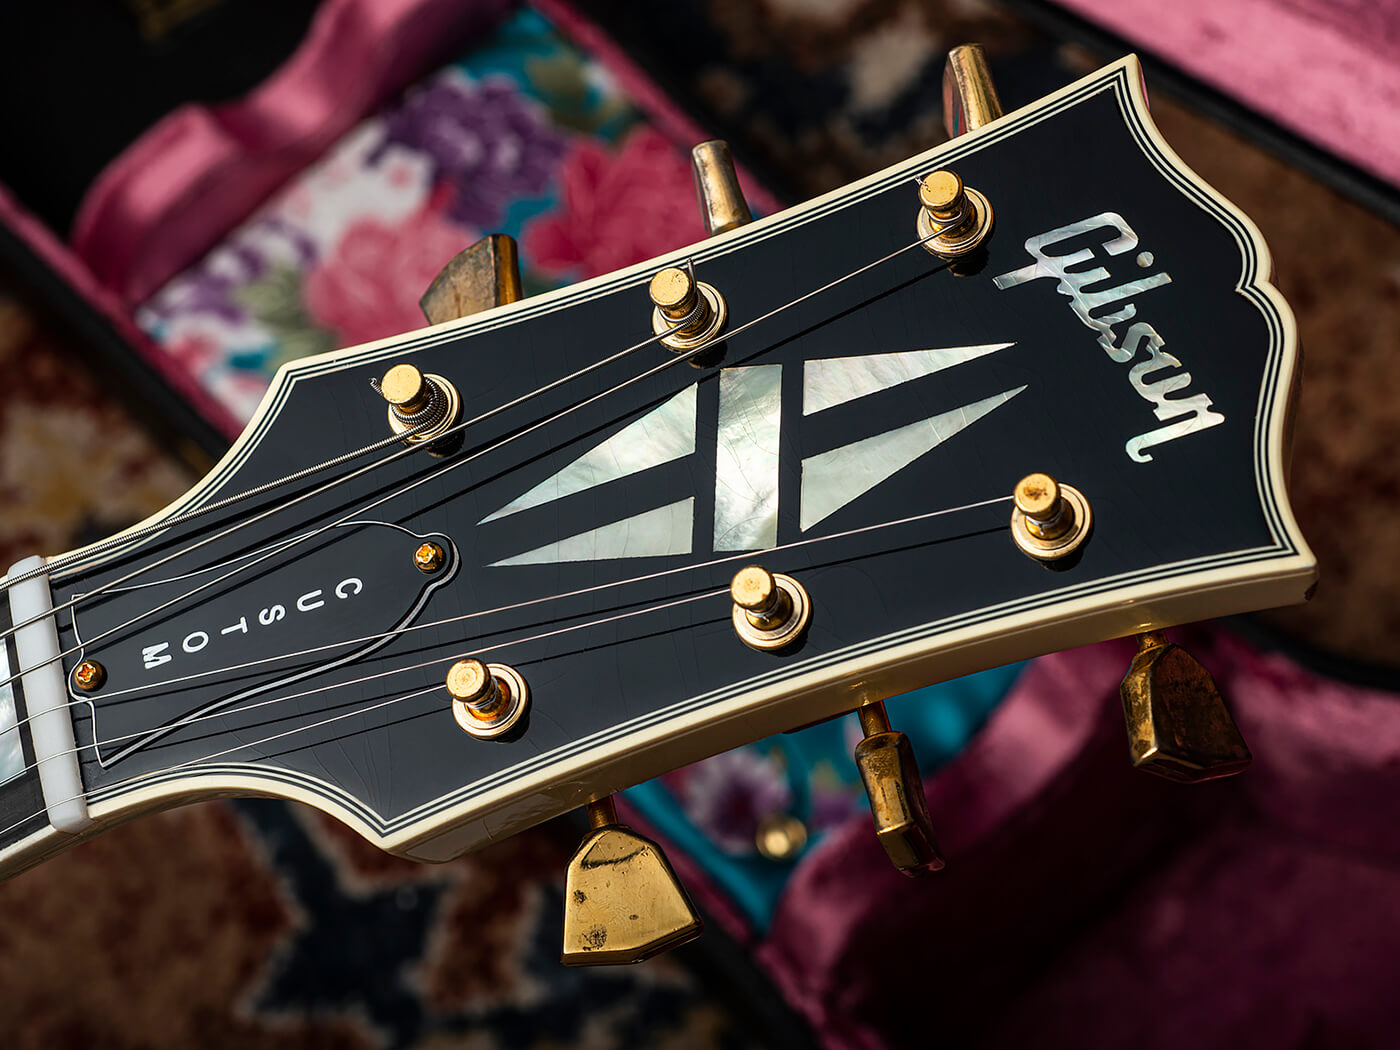 Experiencing Jimi Hendrix's most prized non-Strat guitars